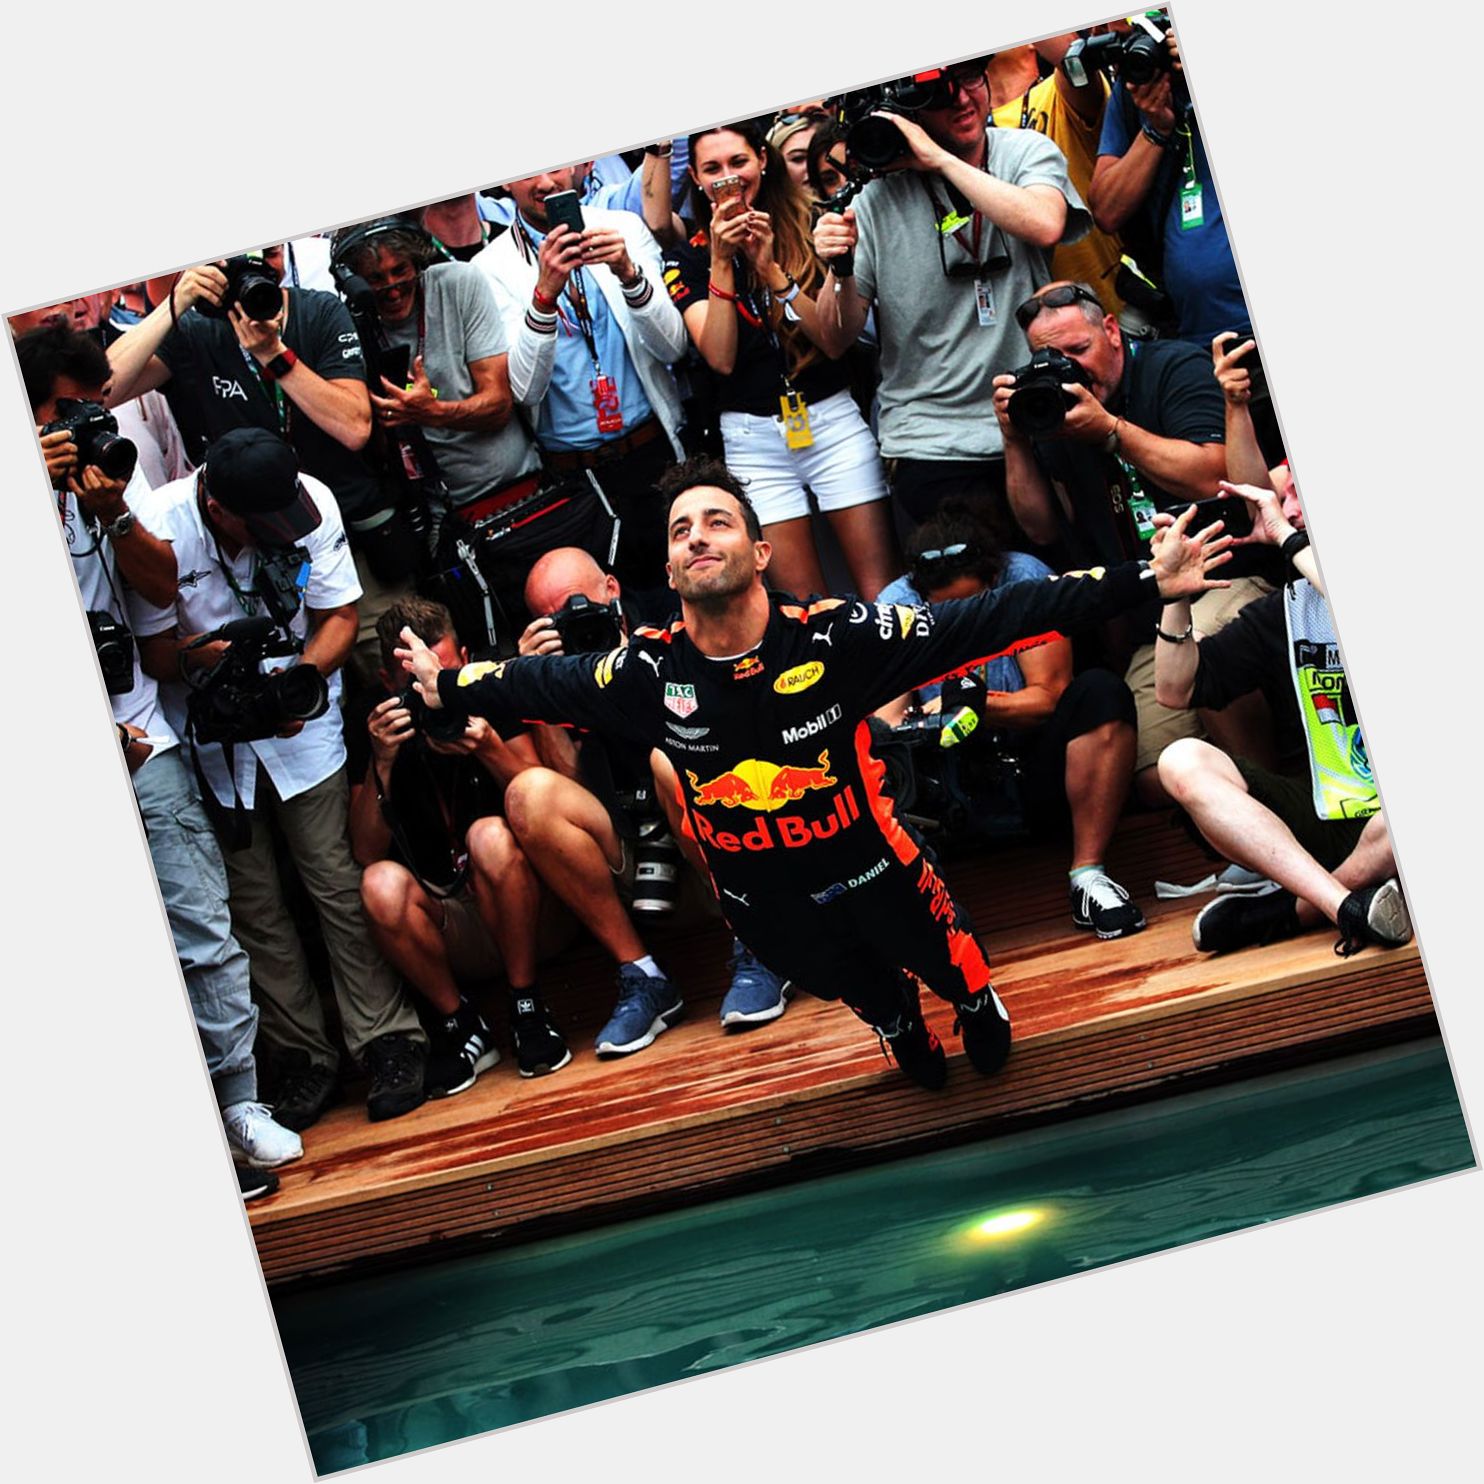 Happy 34th birthday to the 8x Grand Prix winner Daniel Ricciardo!  